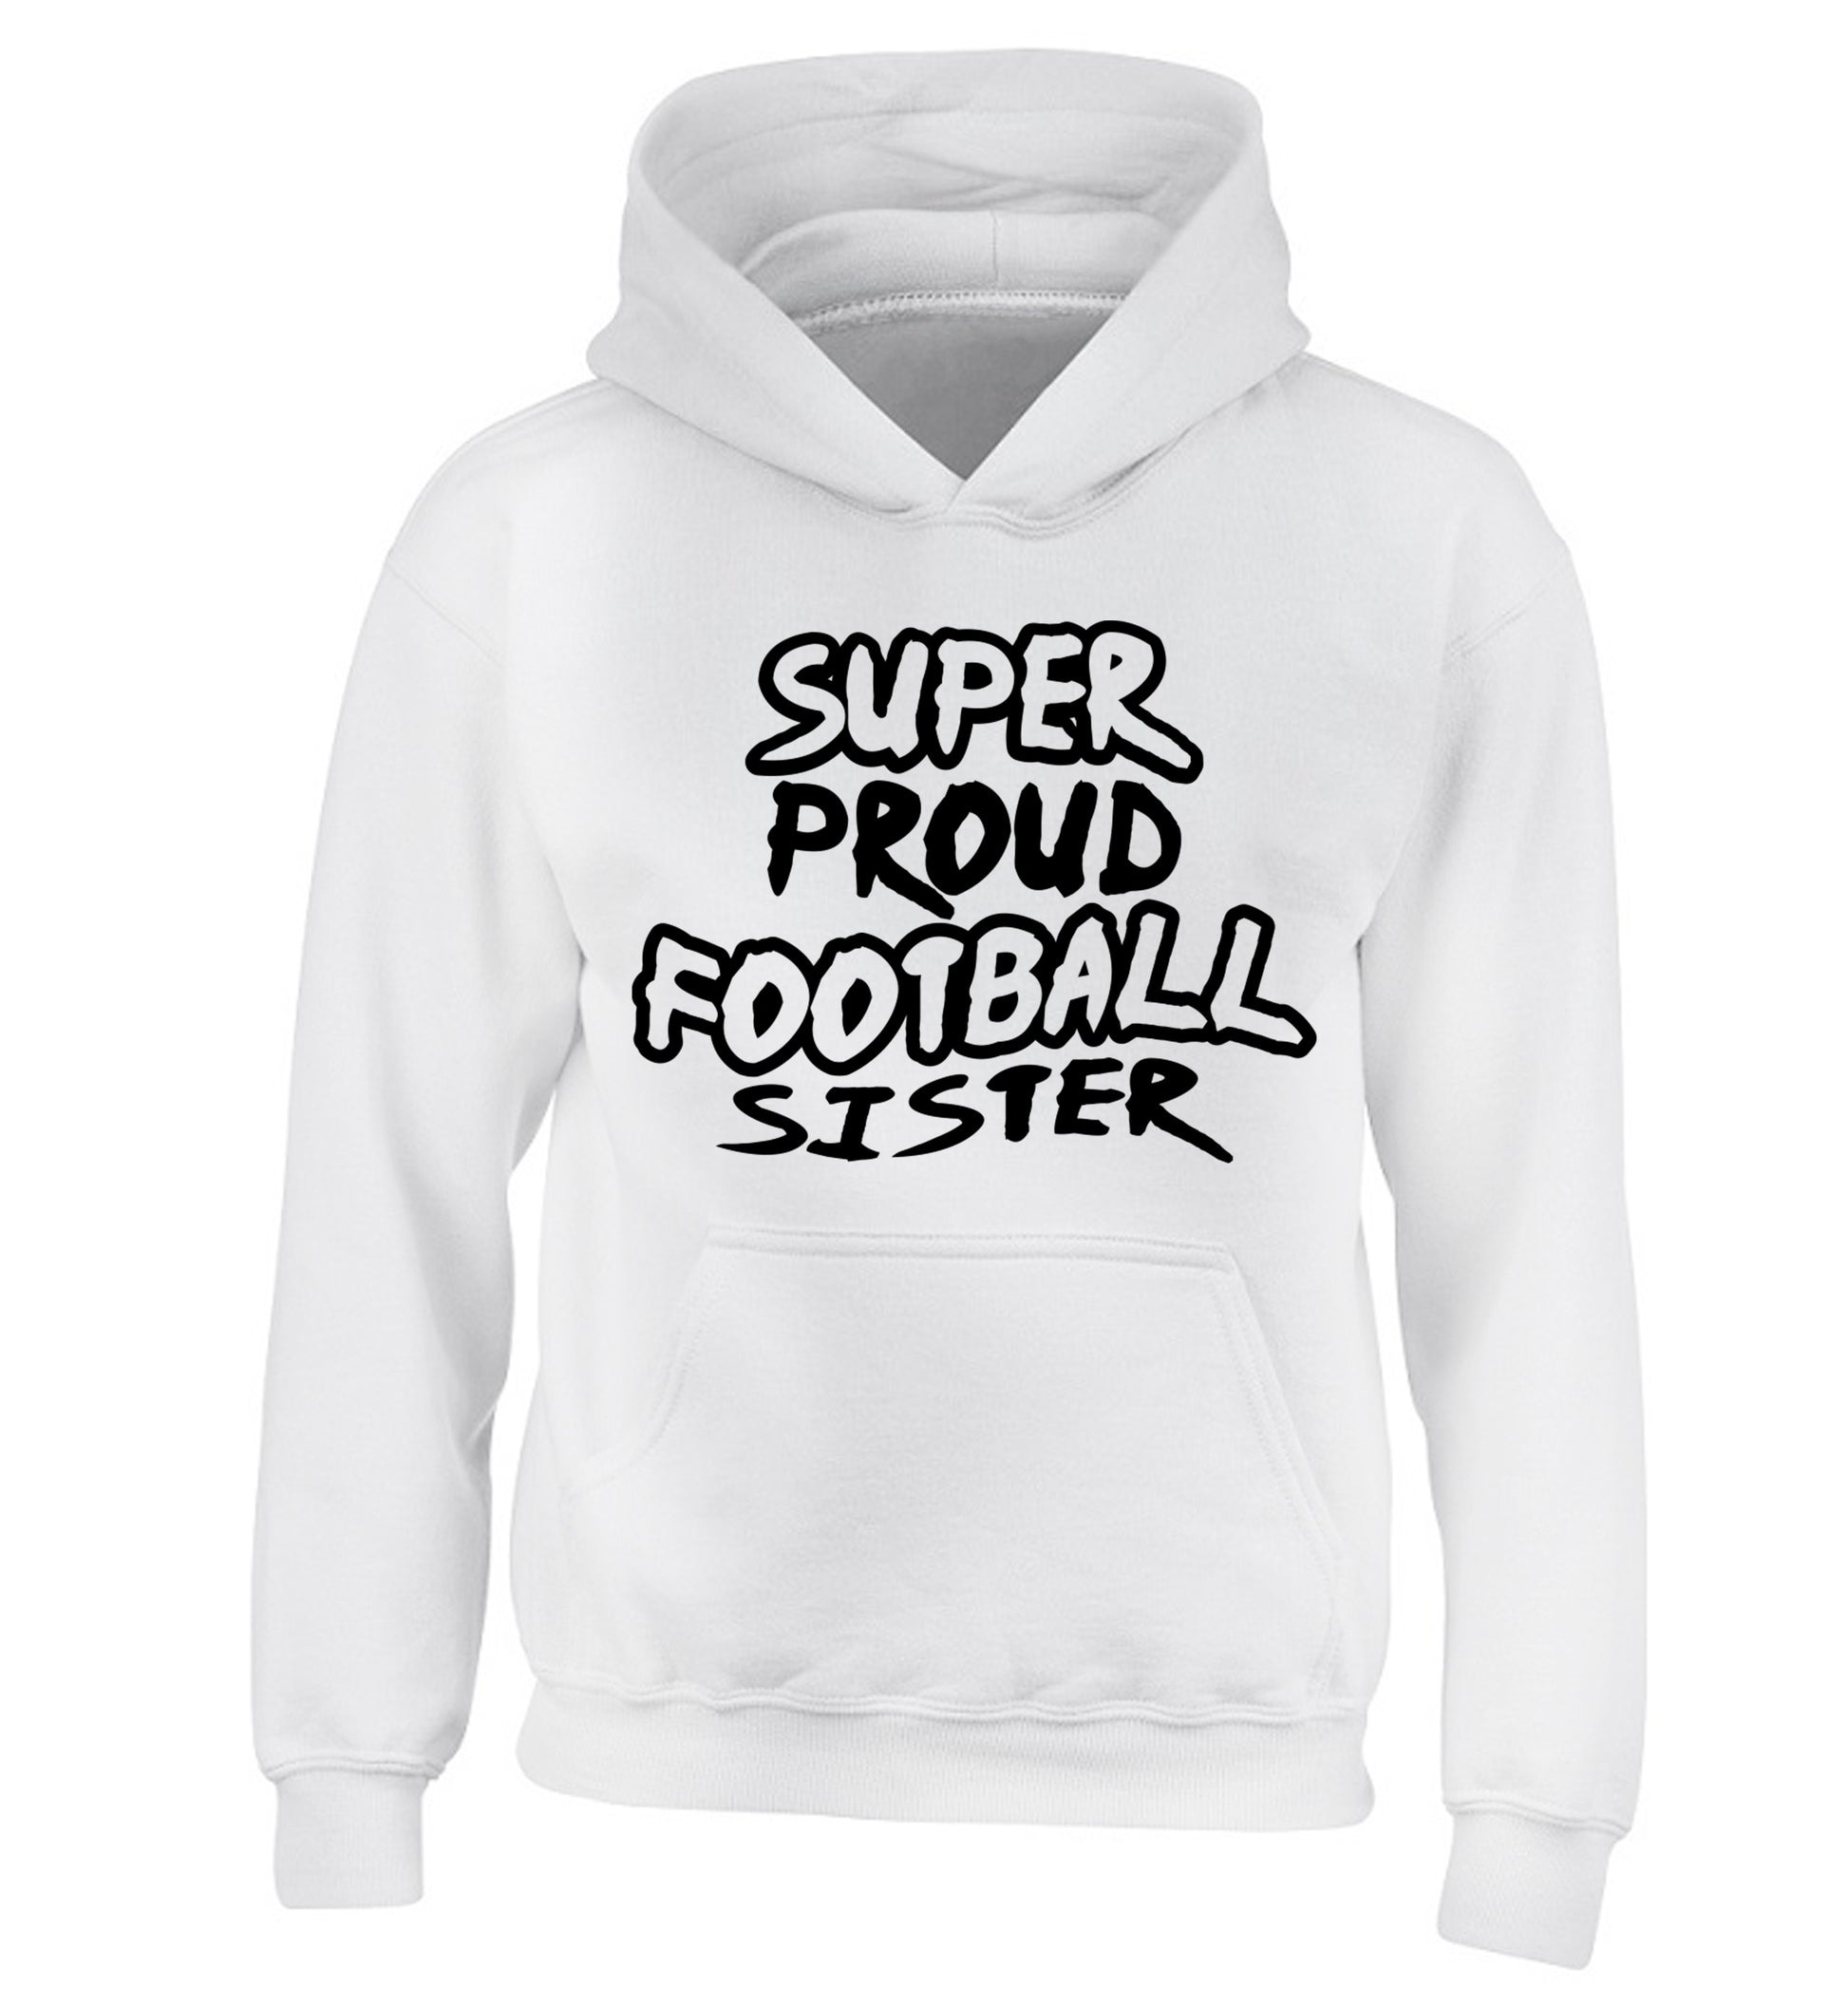 Super proud football sister children's white hoodie 12-14 Years